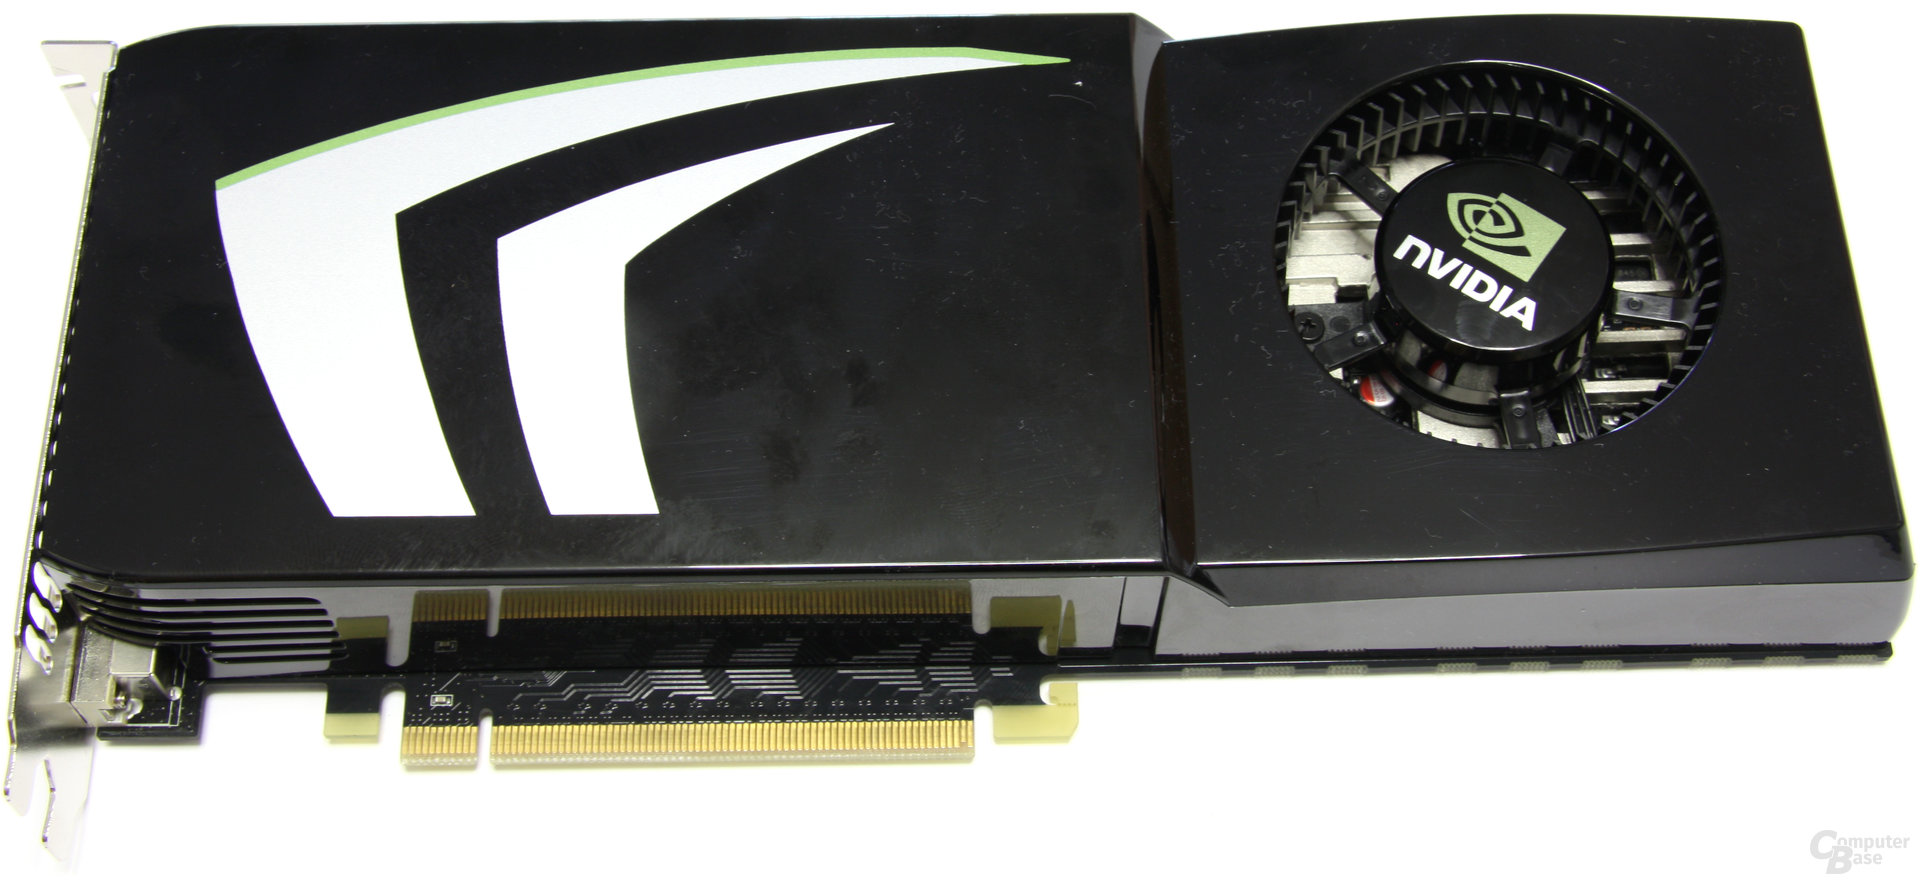 Nvidia GeForce GTX 275